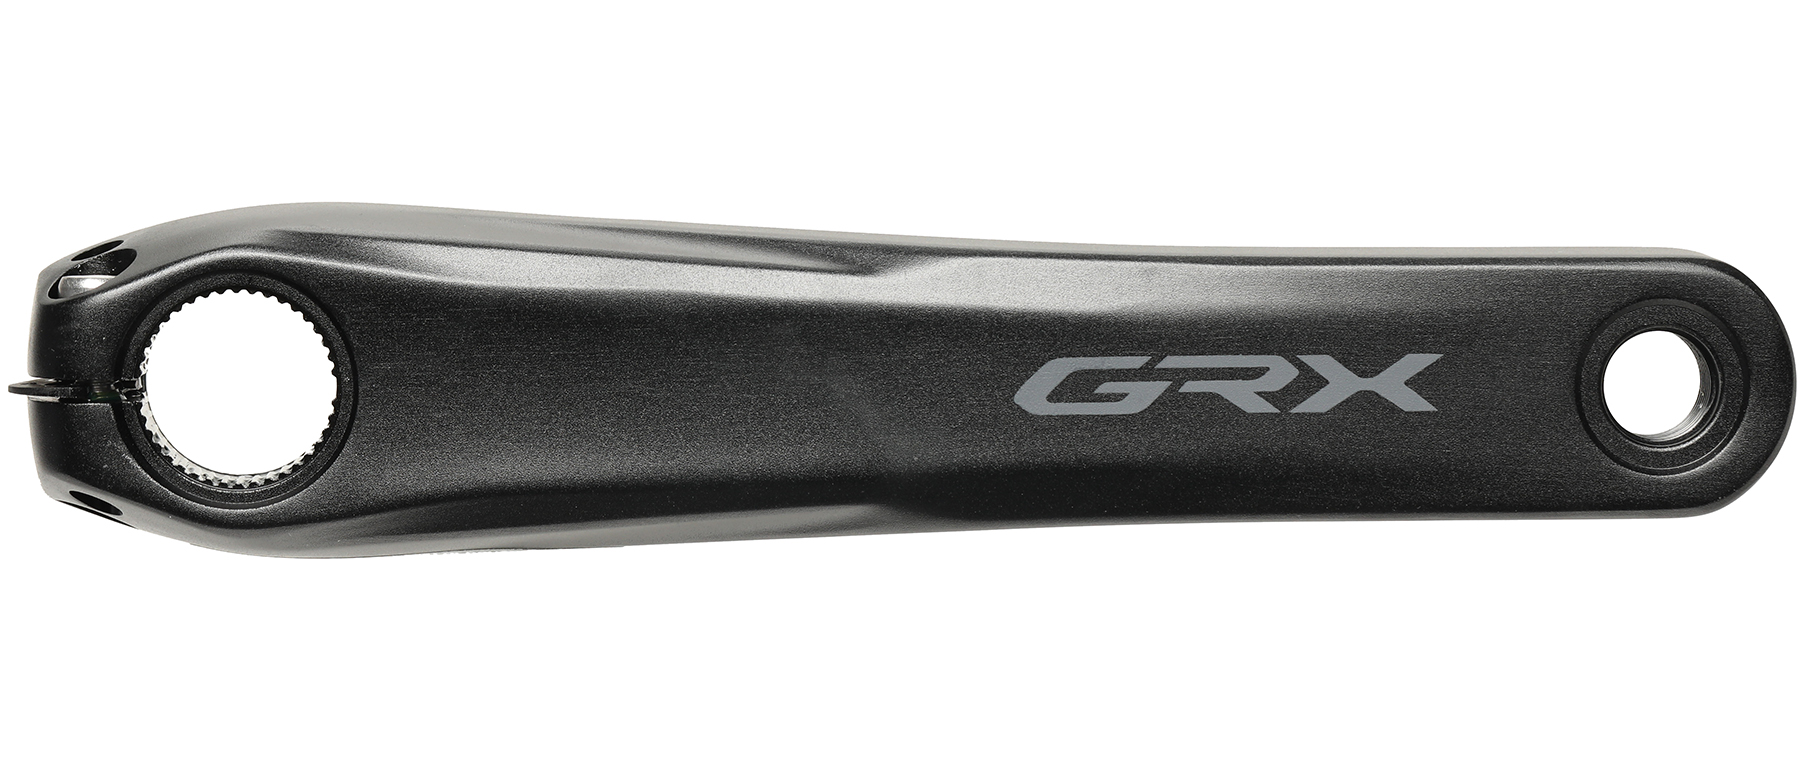 Shimano GRX FC-RX600 2x Crankset